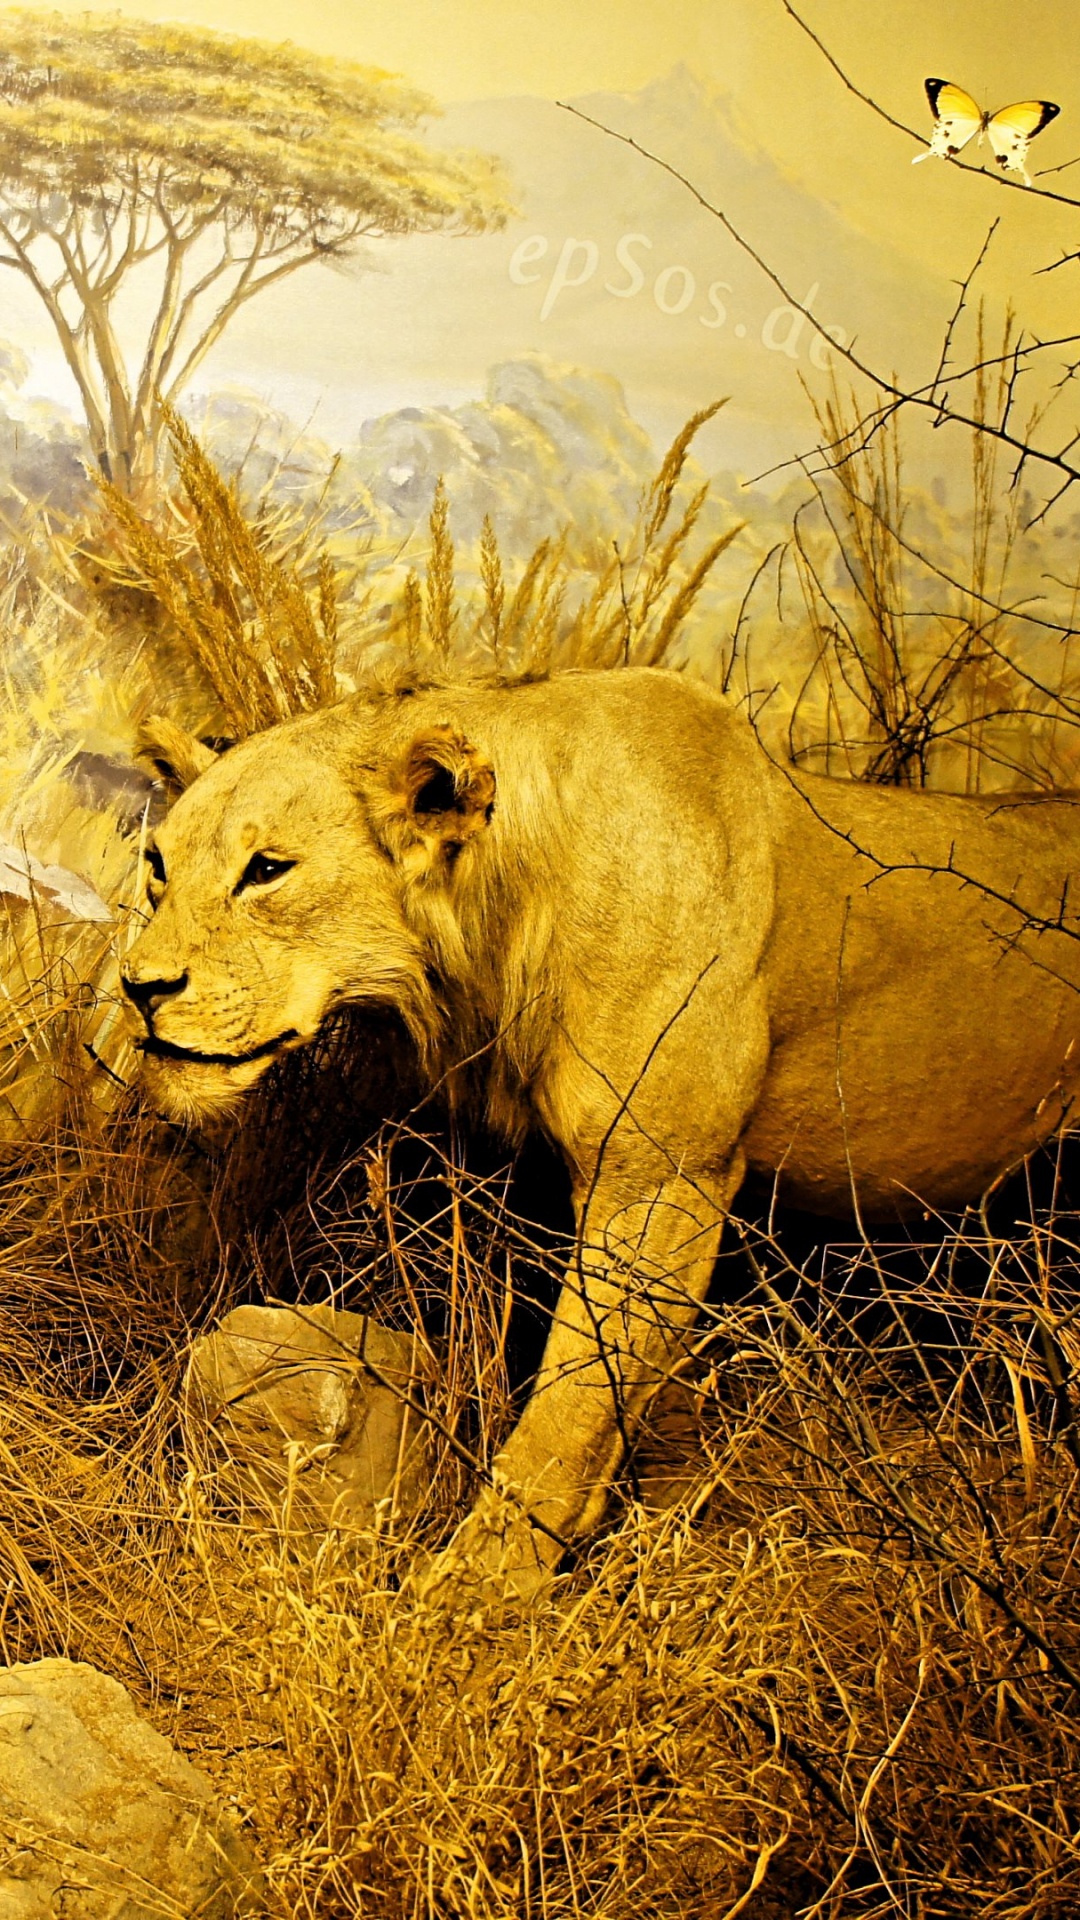 Brown Lion on Brown Grass Field During Daytime. Wallpaper in 1080x1920 Resolution